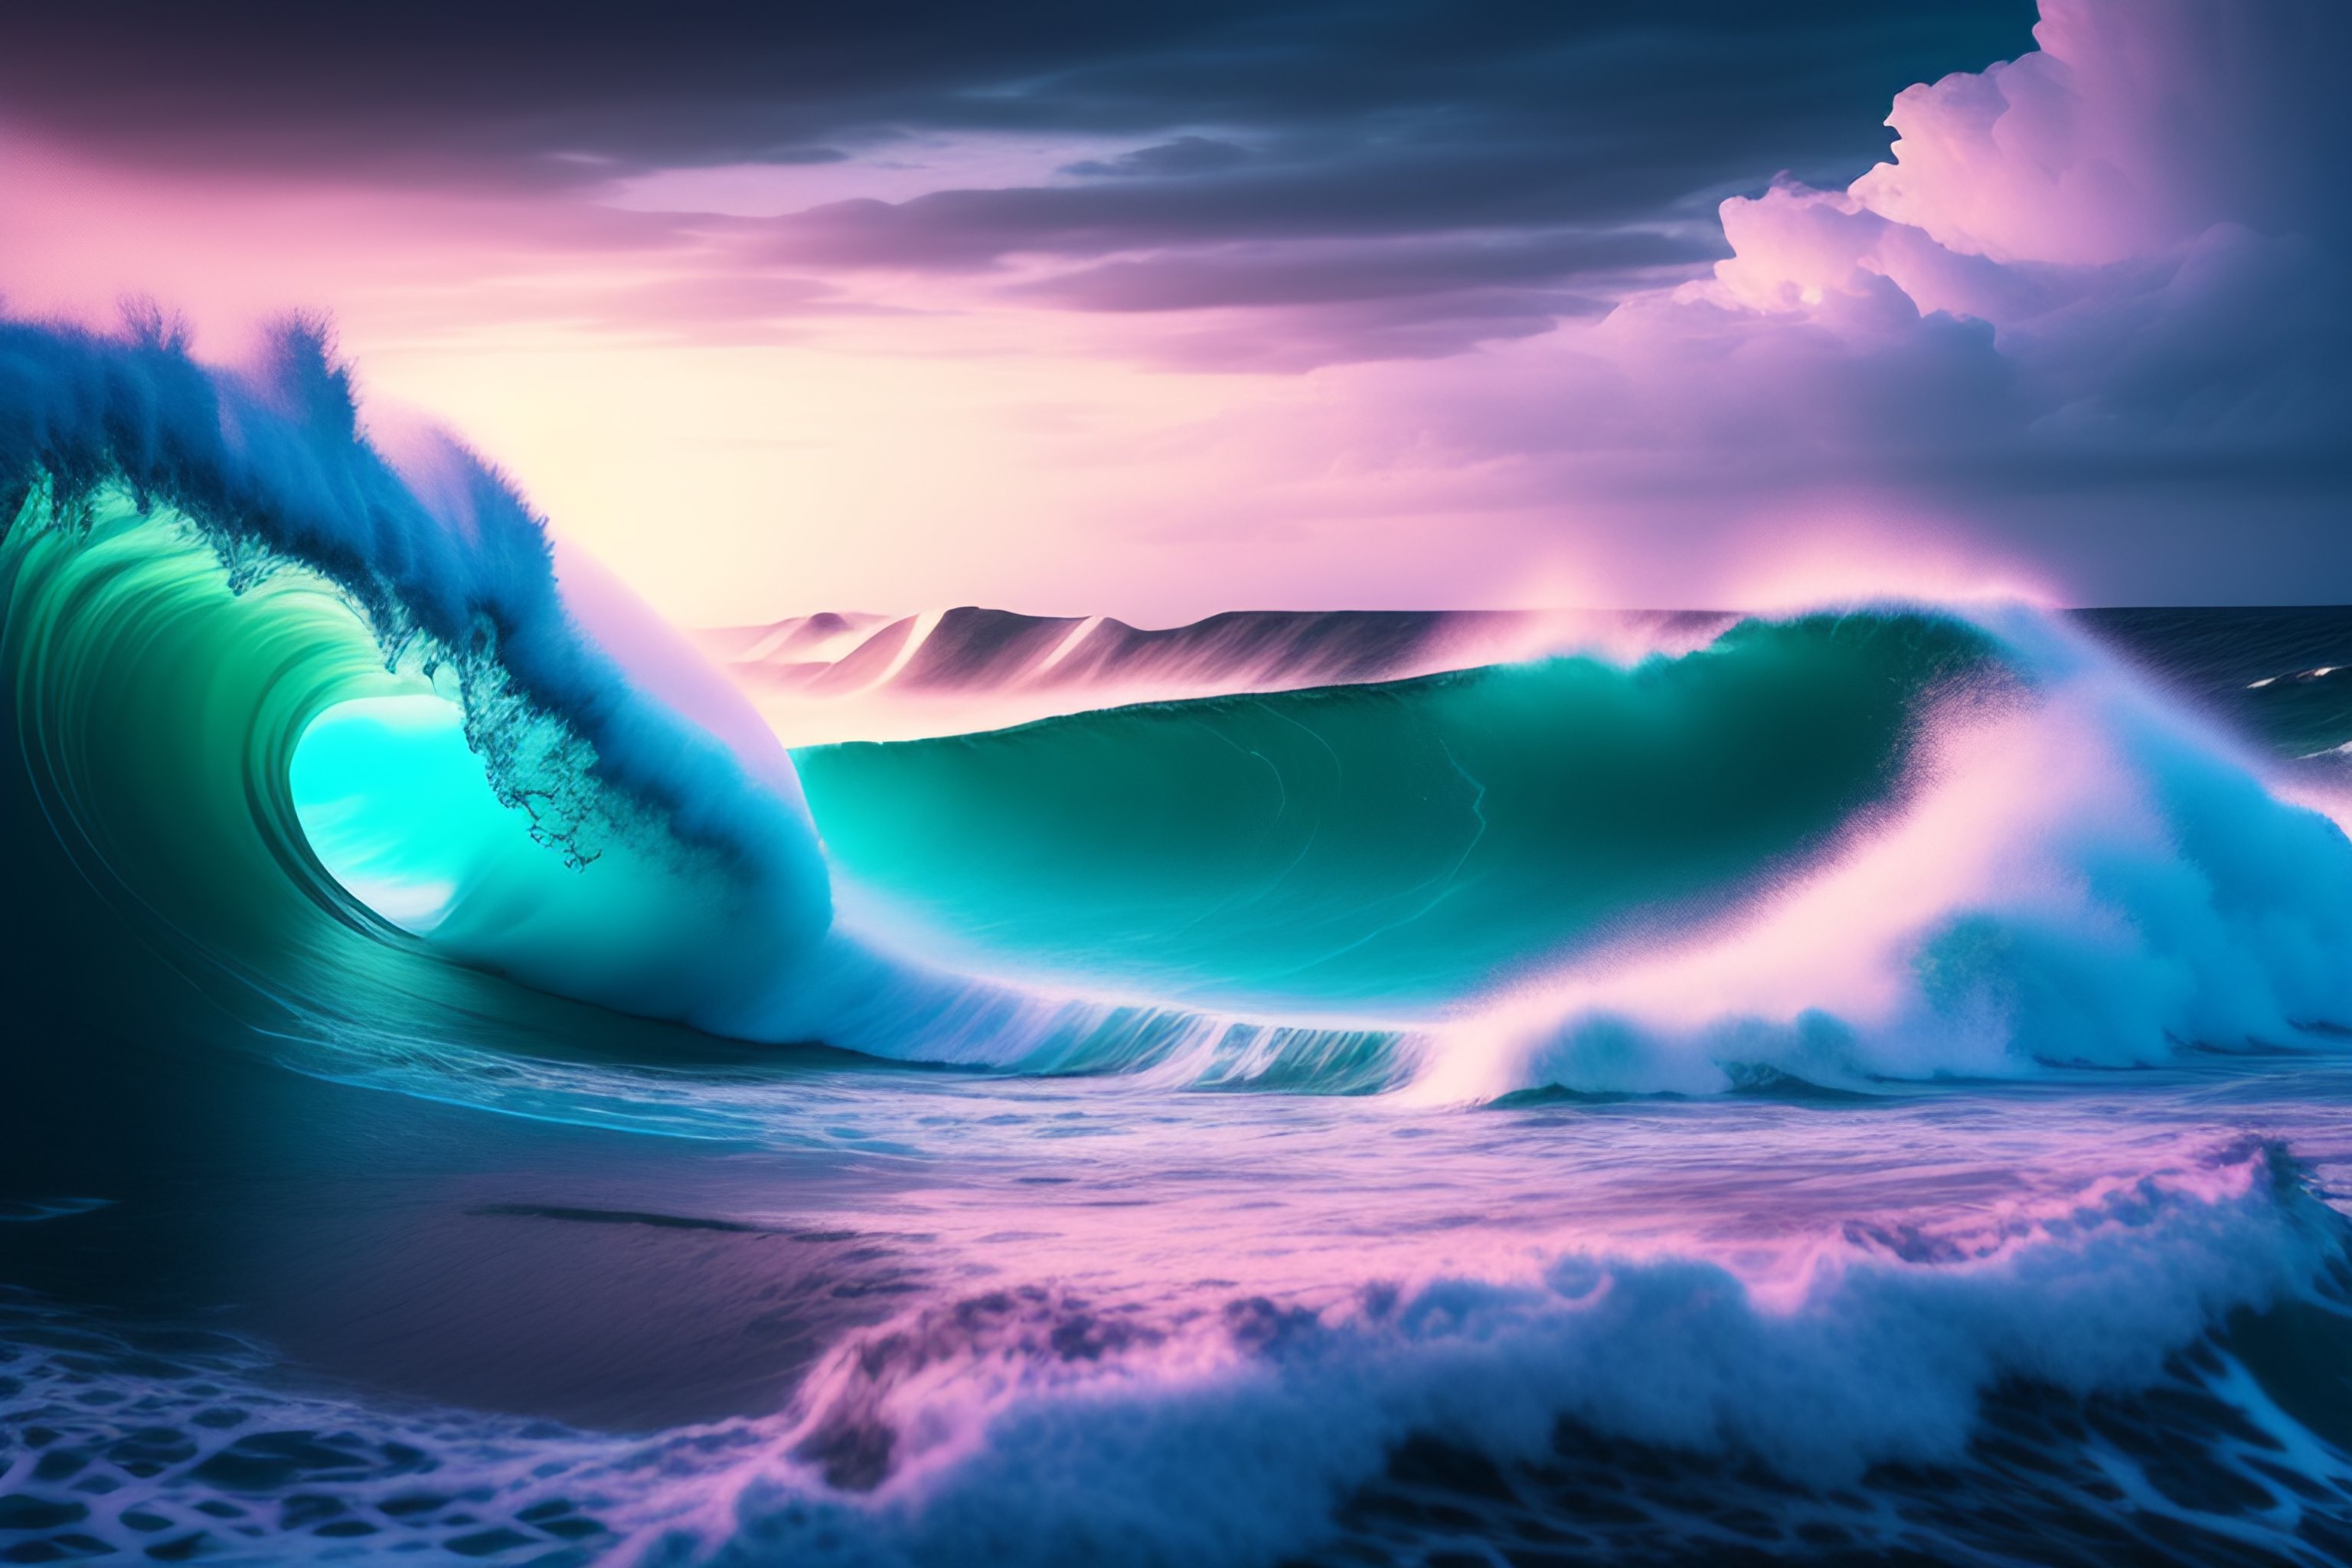 Lexica - When a huge wave crashes onto the shore of a tropical beach ...